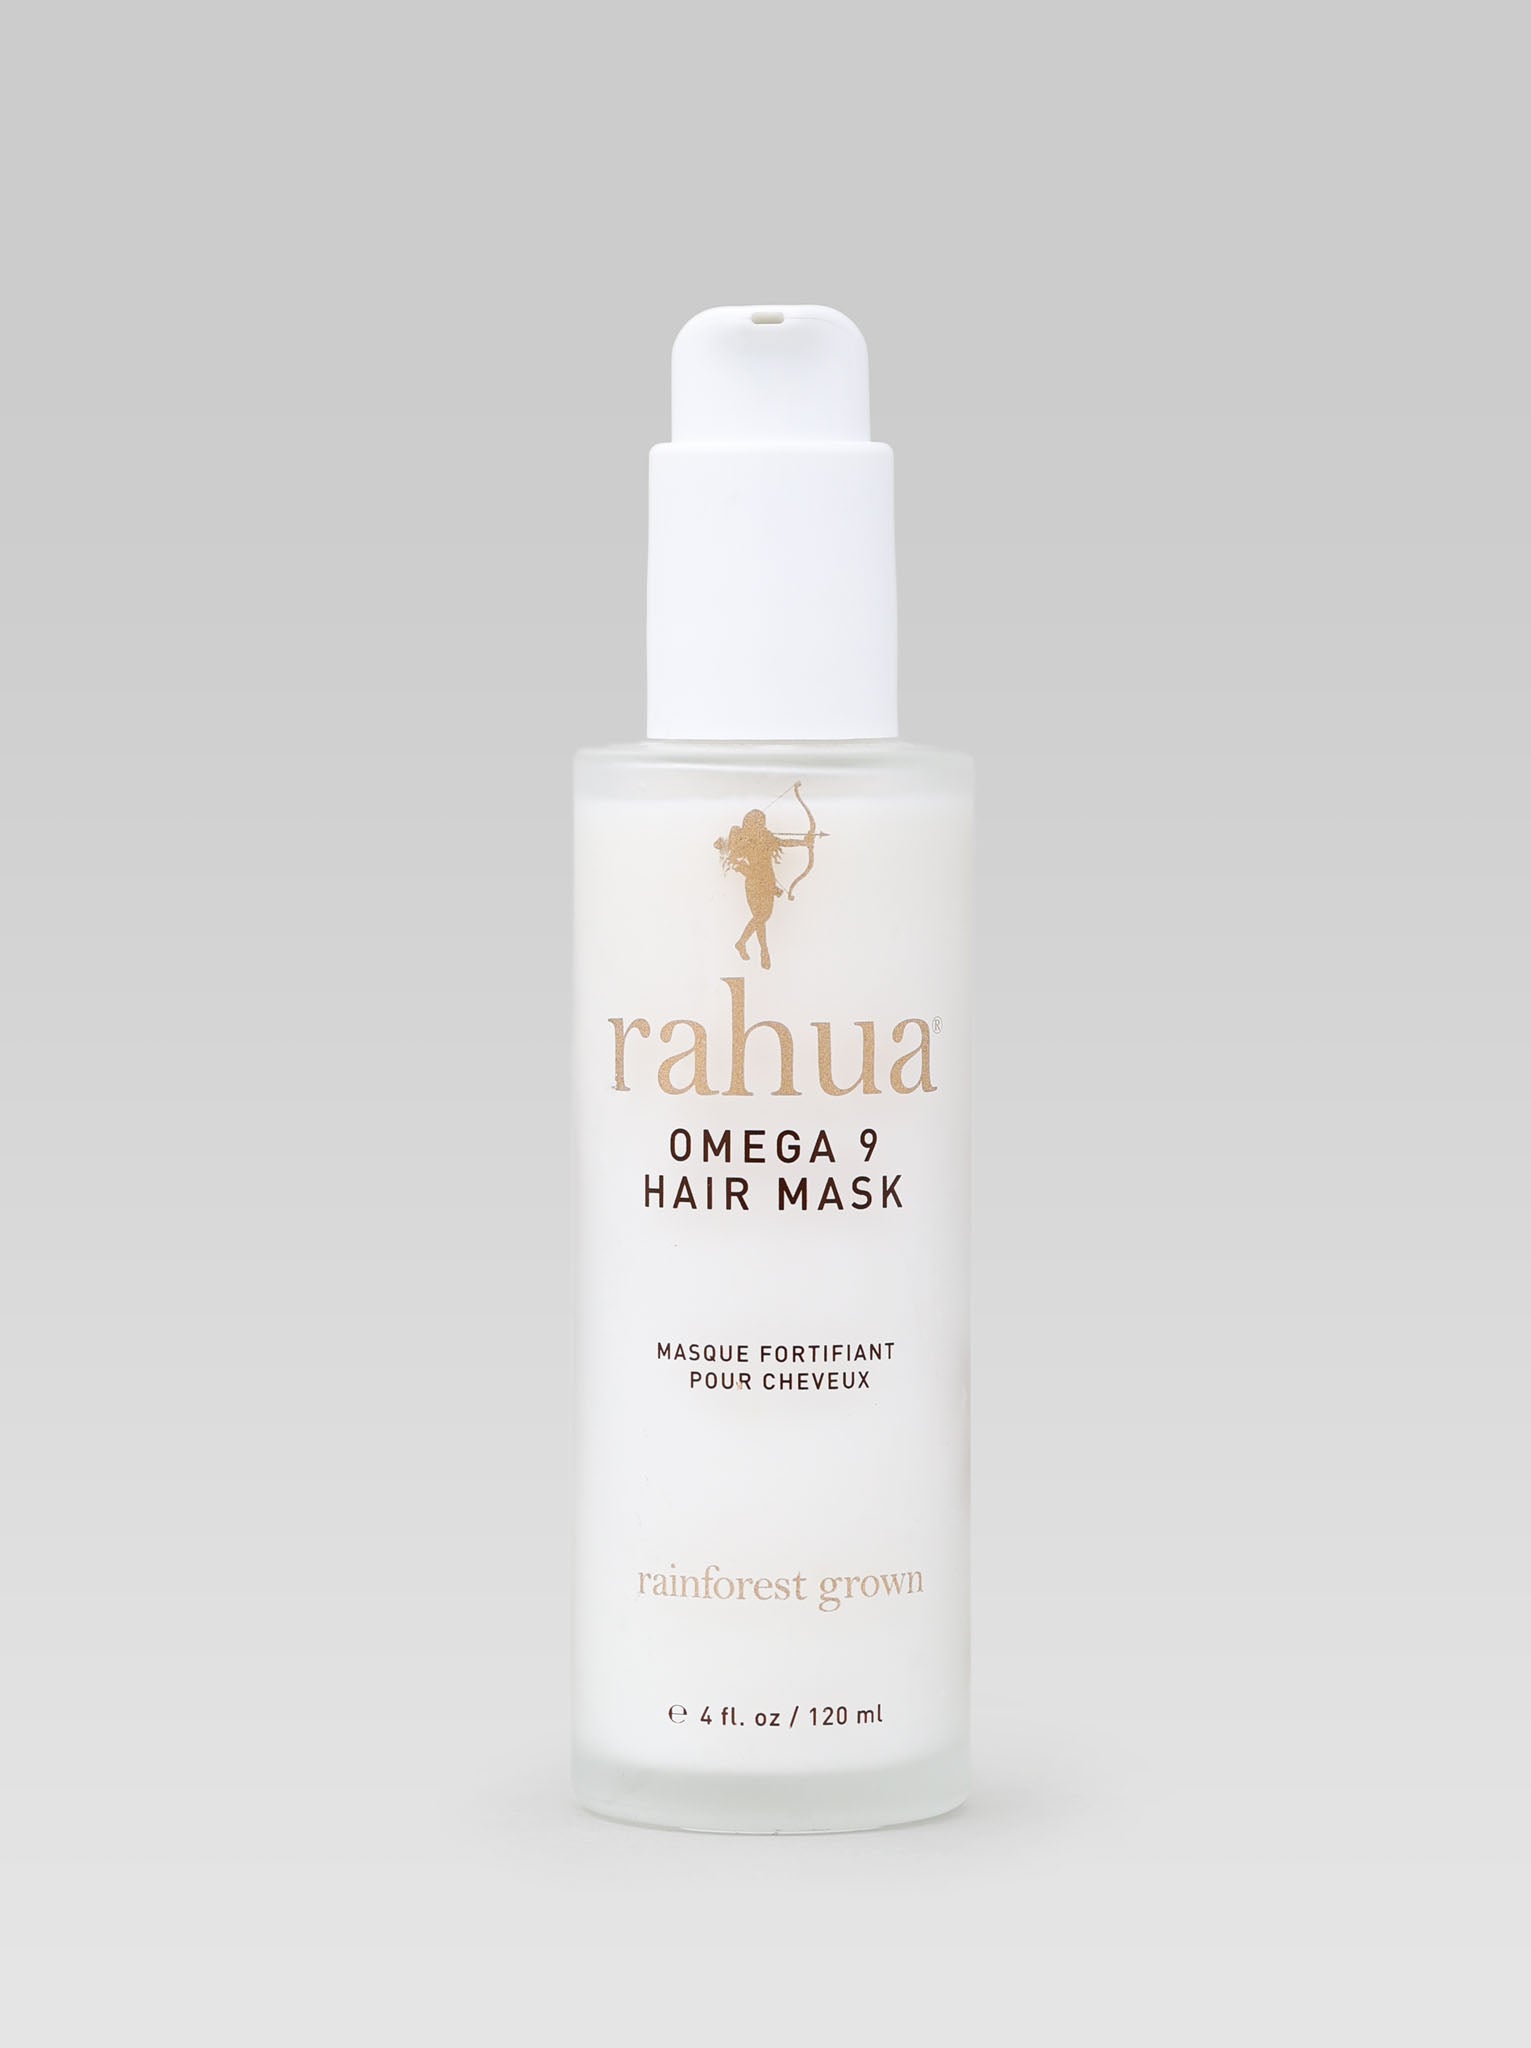 RAHUA Omega 9 Hair Mask product shot